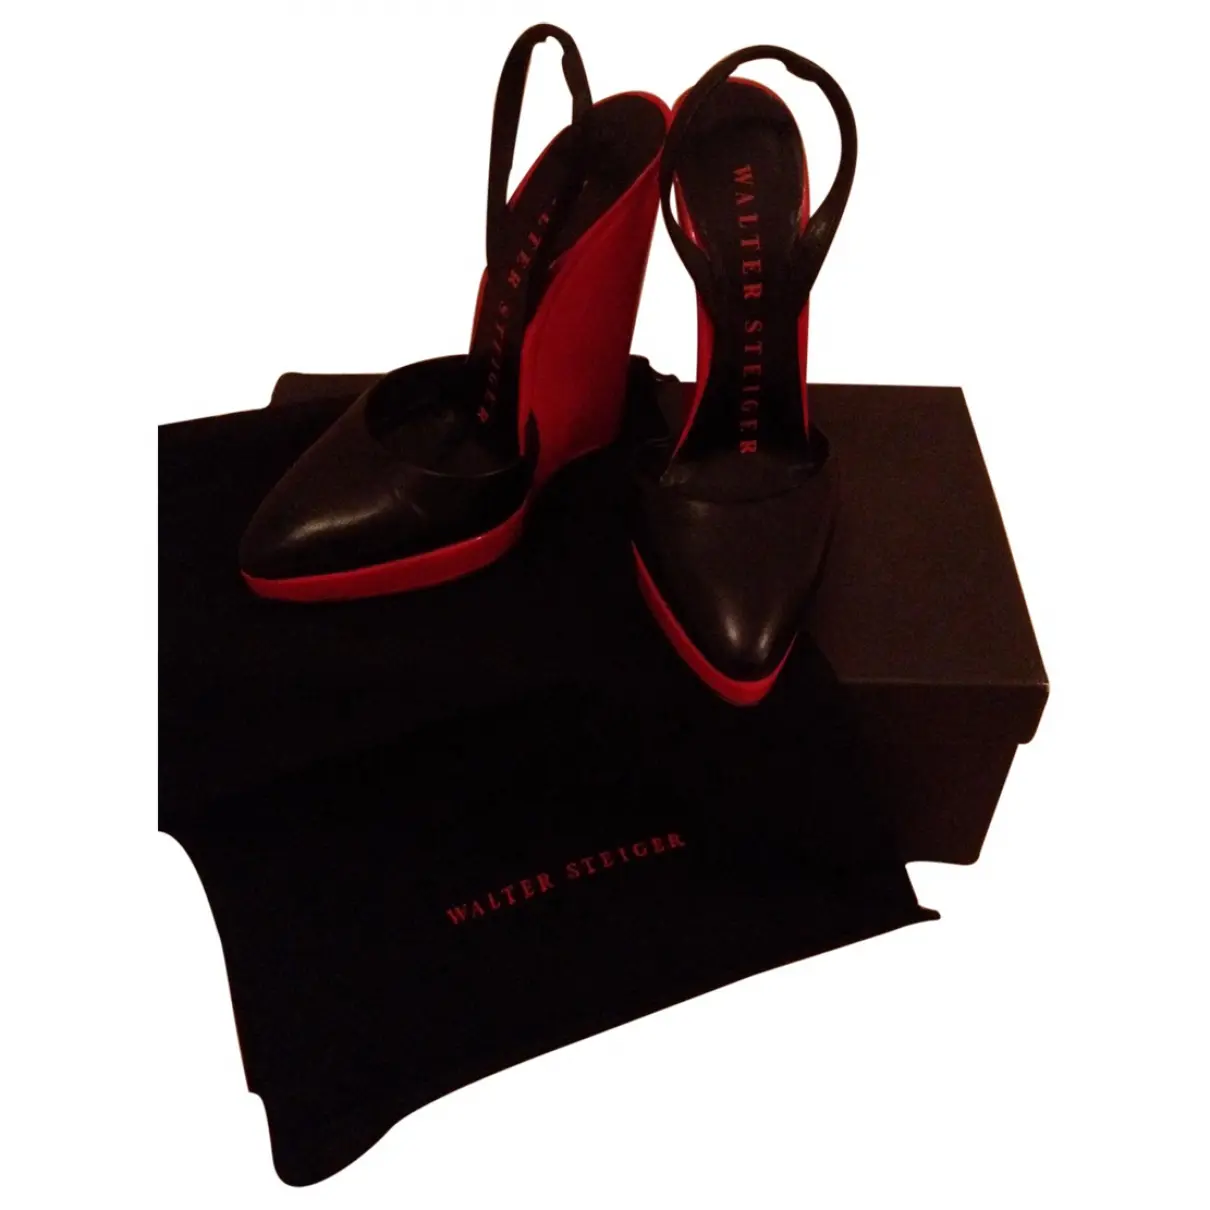 Buy Walter Steiger Leather heels online